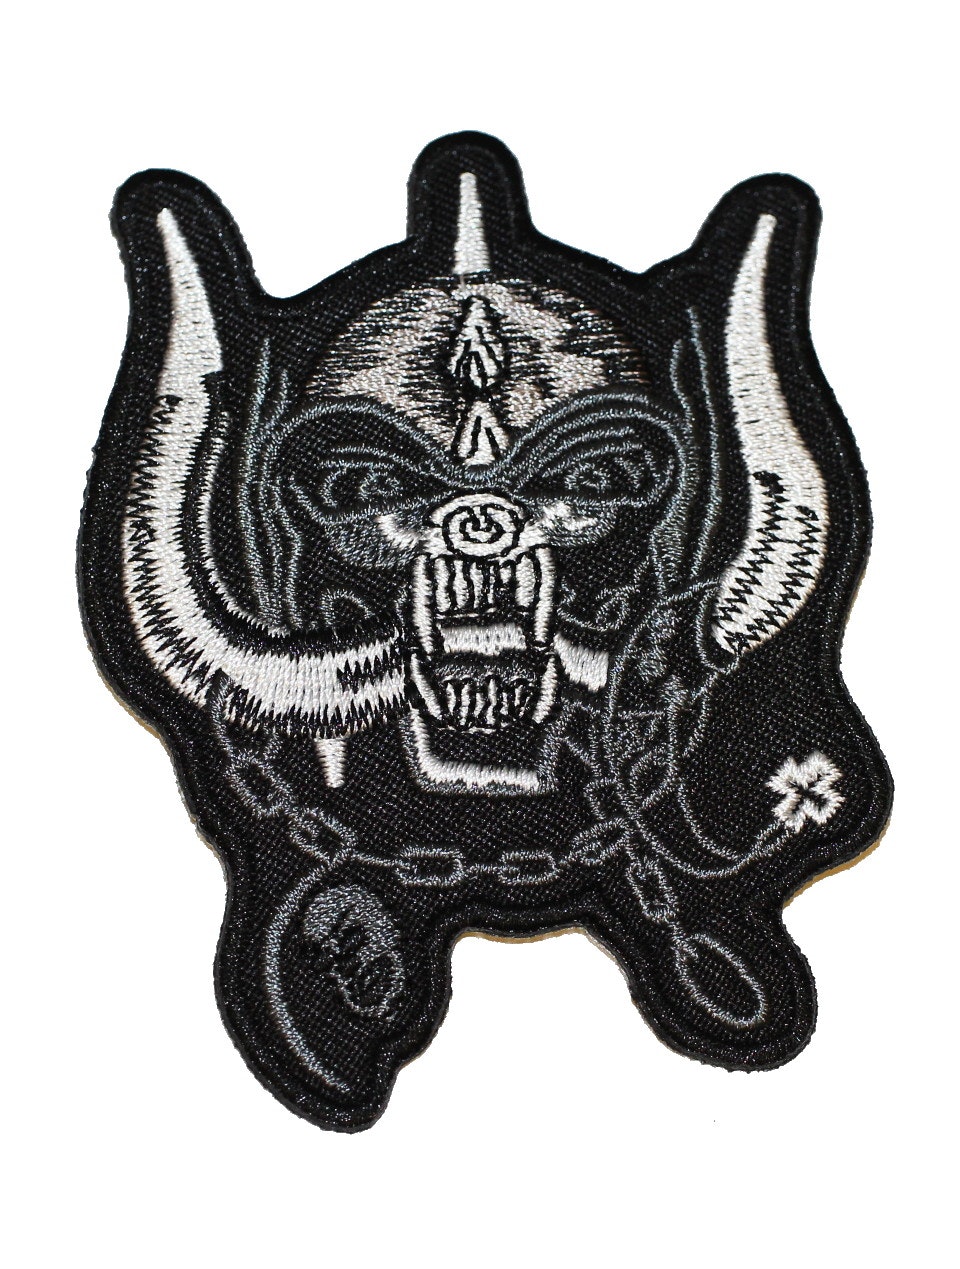 Motörhead snaggletooth logo patch